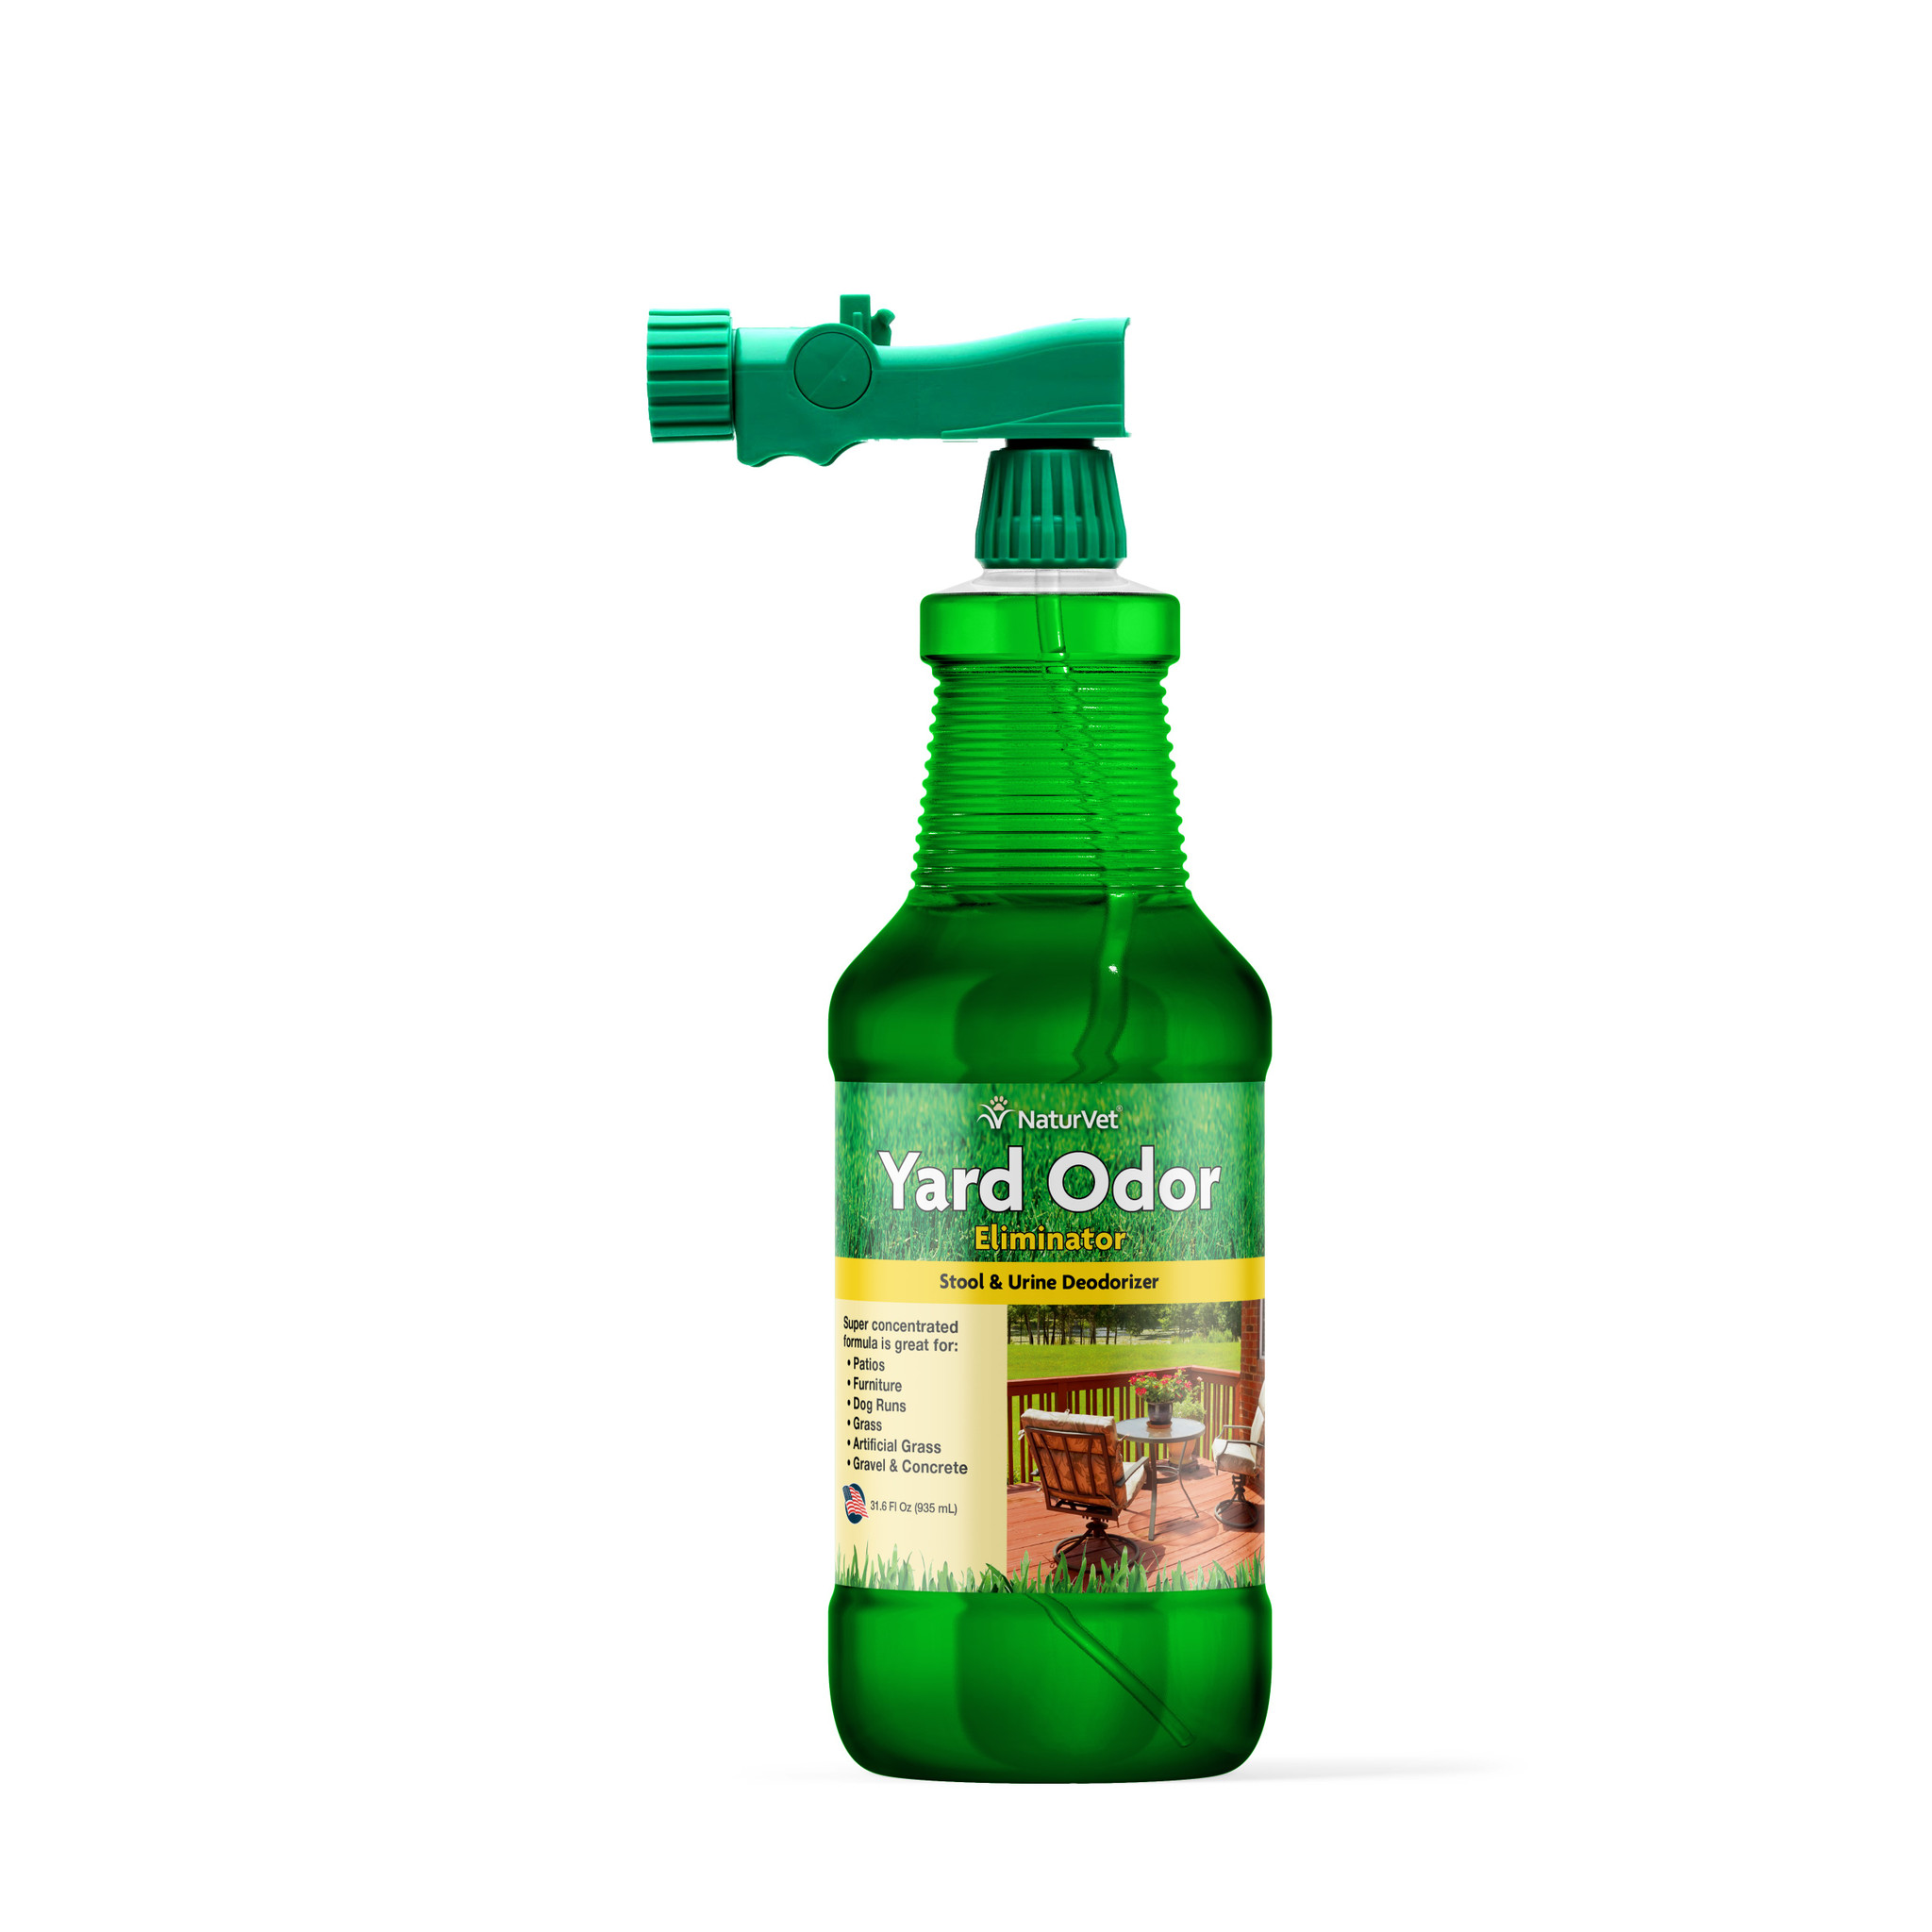 Spray PET Plastic Bottles - 2 & 4 fl-oz